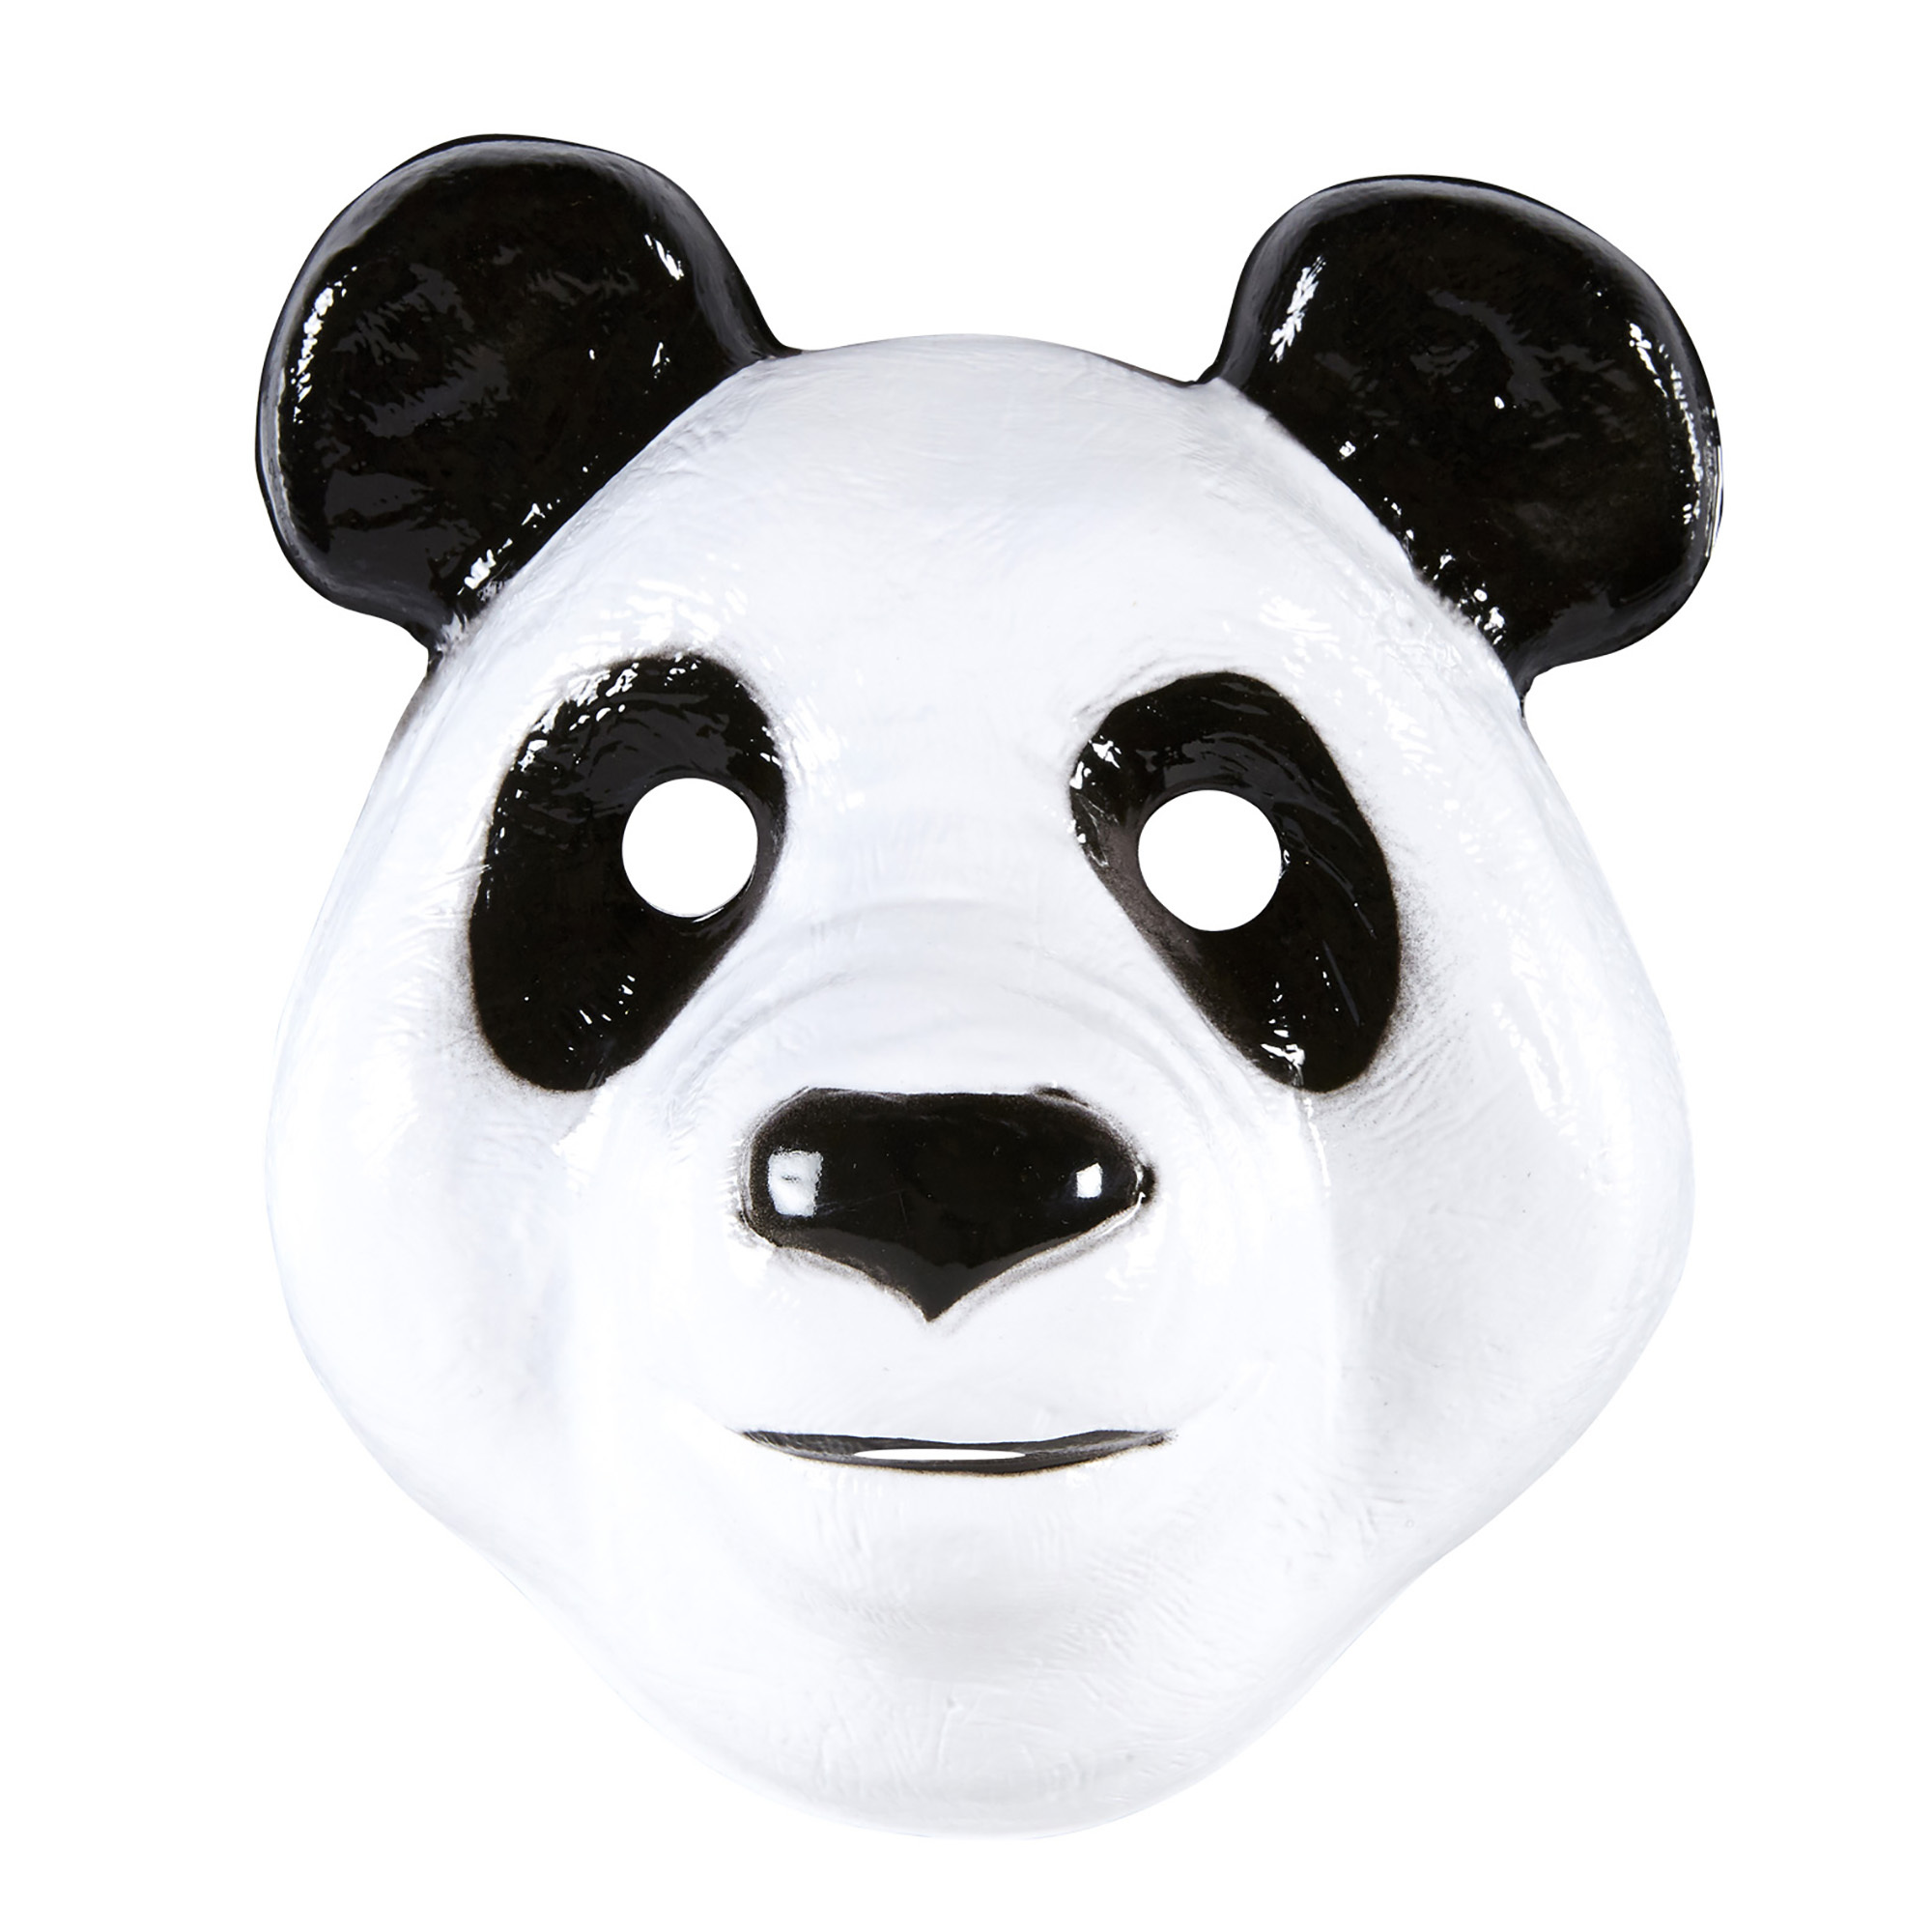 Panda masker zwart wit voor kind pvc.